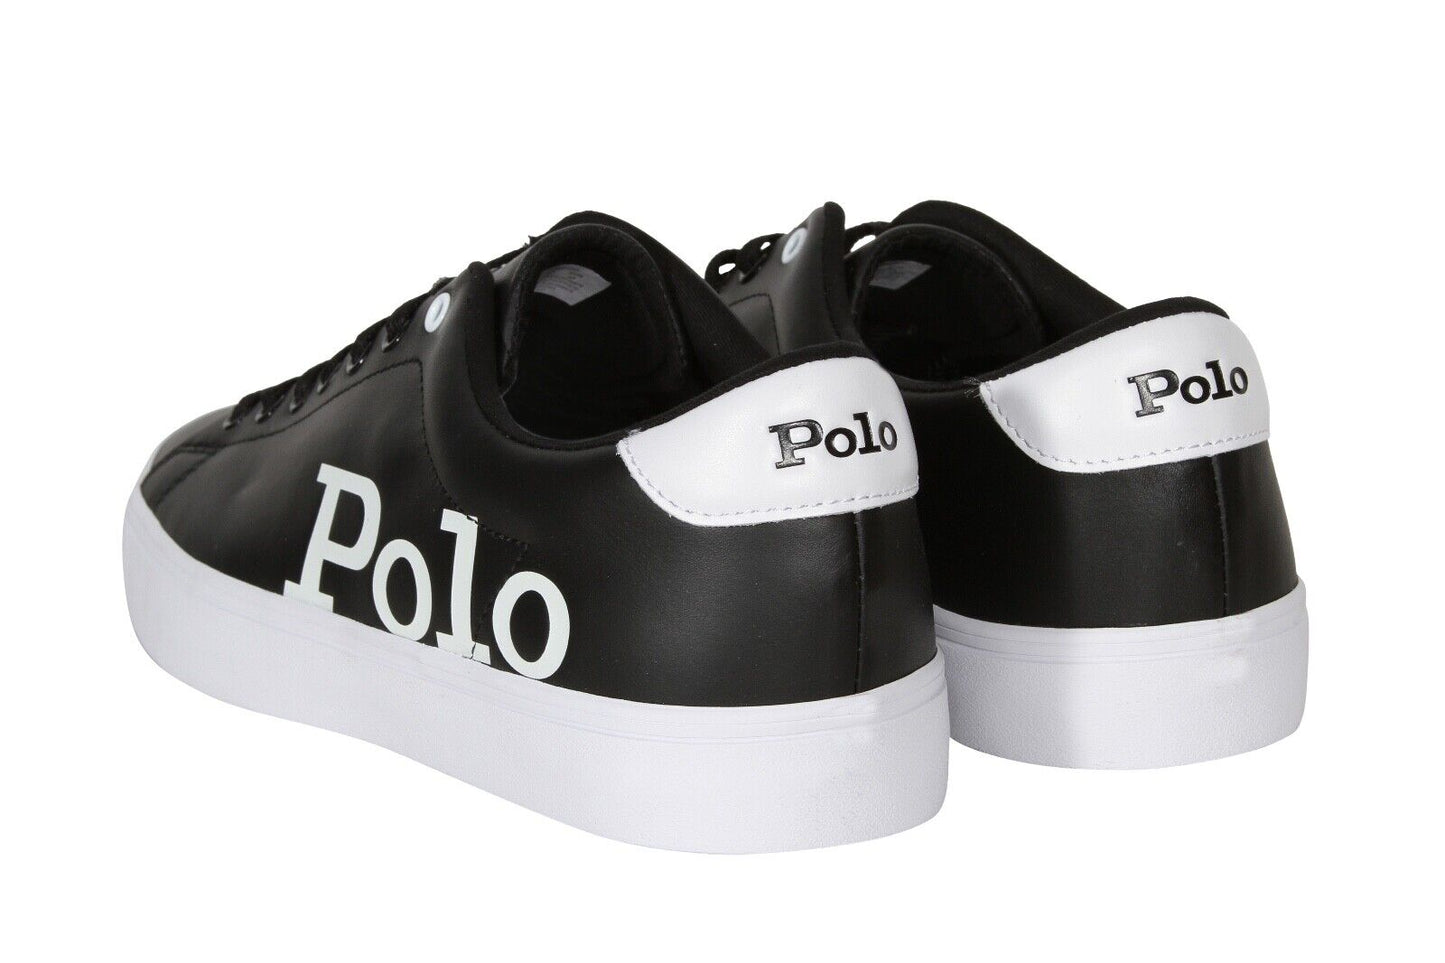 Polo Ralph Lauren Longwood Logo Men’s Sneakers in Black and White 816862547002